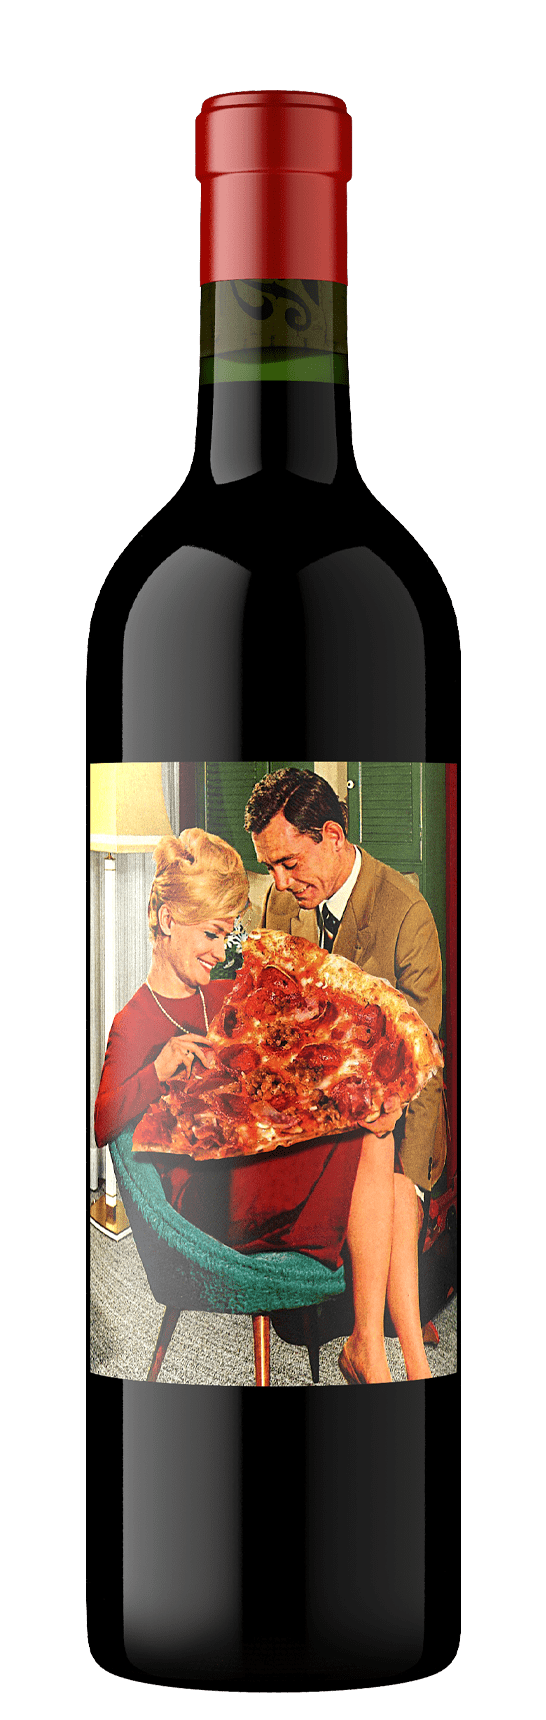 Pizzaboy Wine Bottle